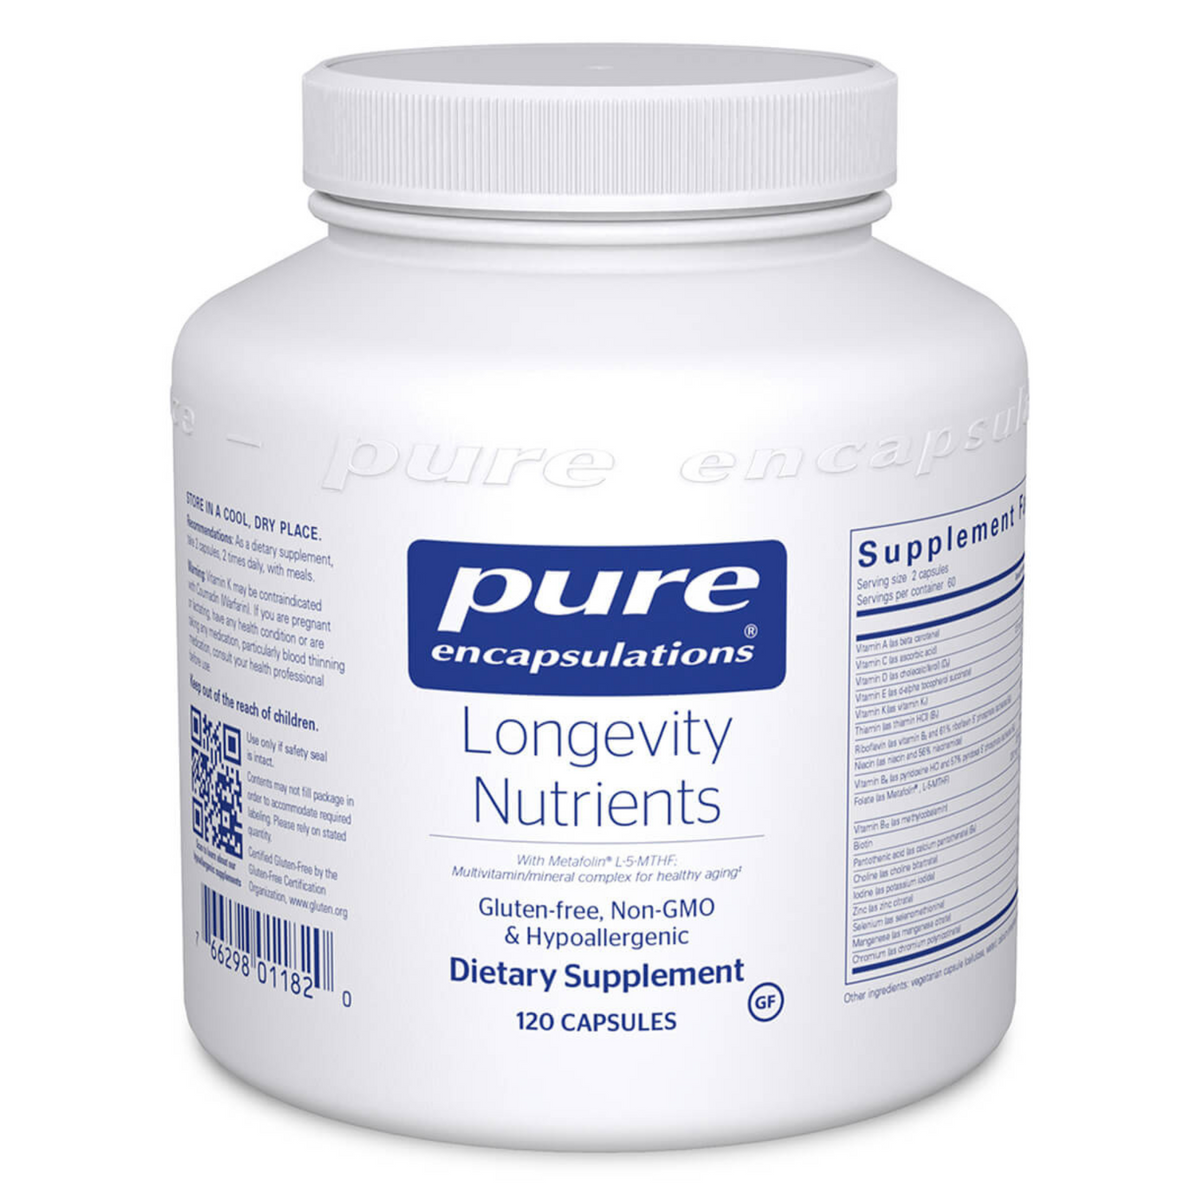 Primary Image of Pure Encapsulations Longevity Nutrients (120 count) 